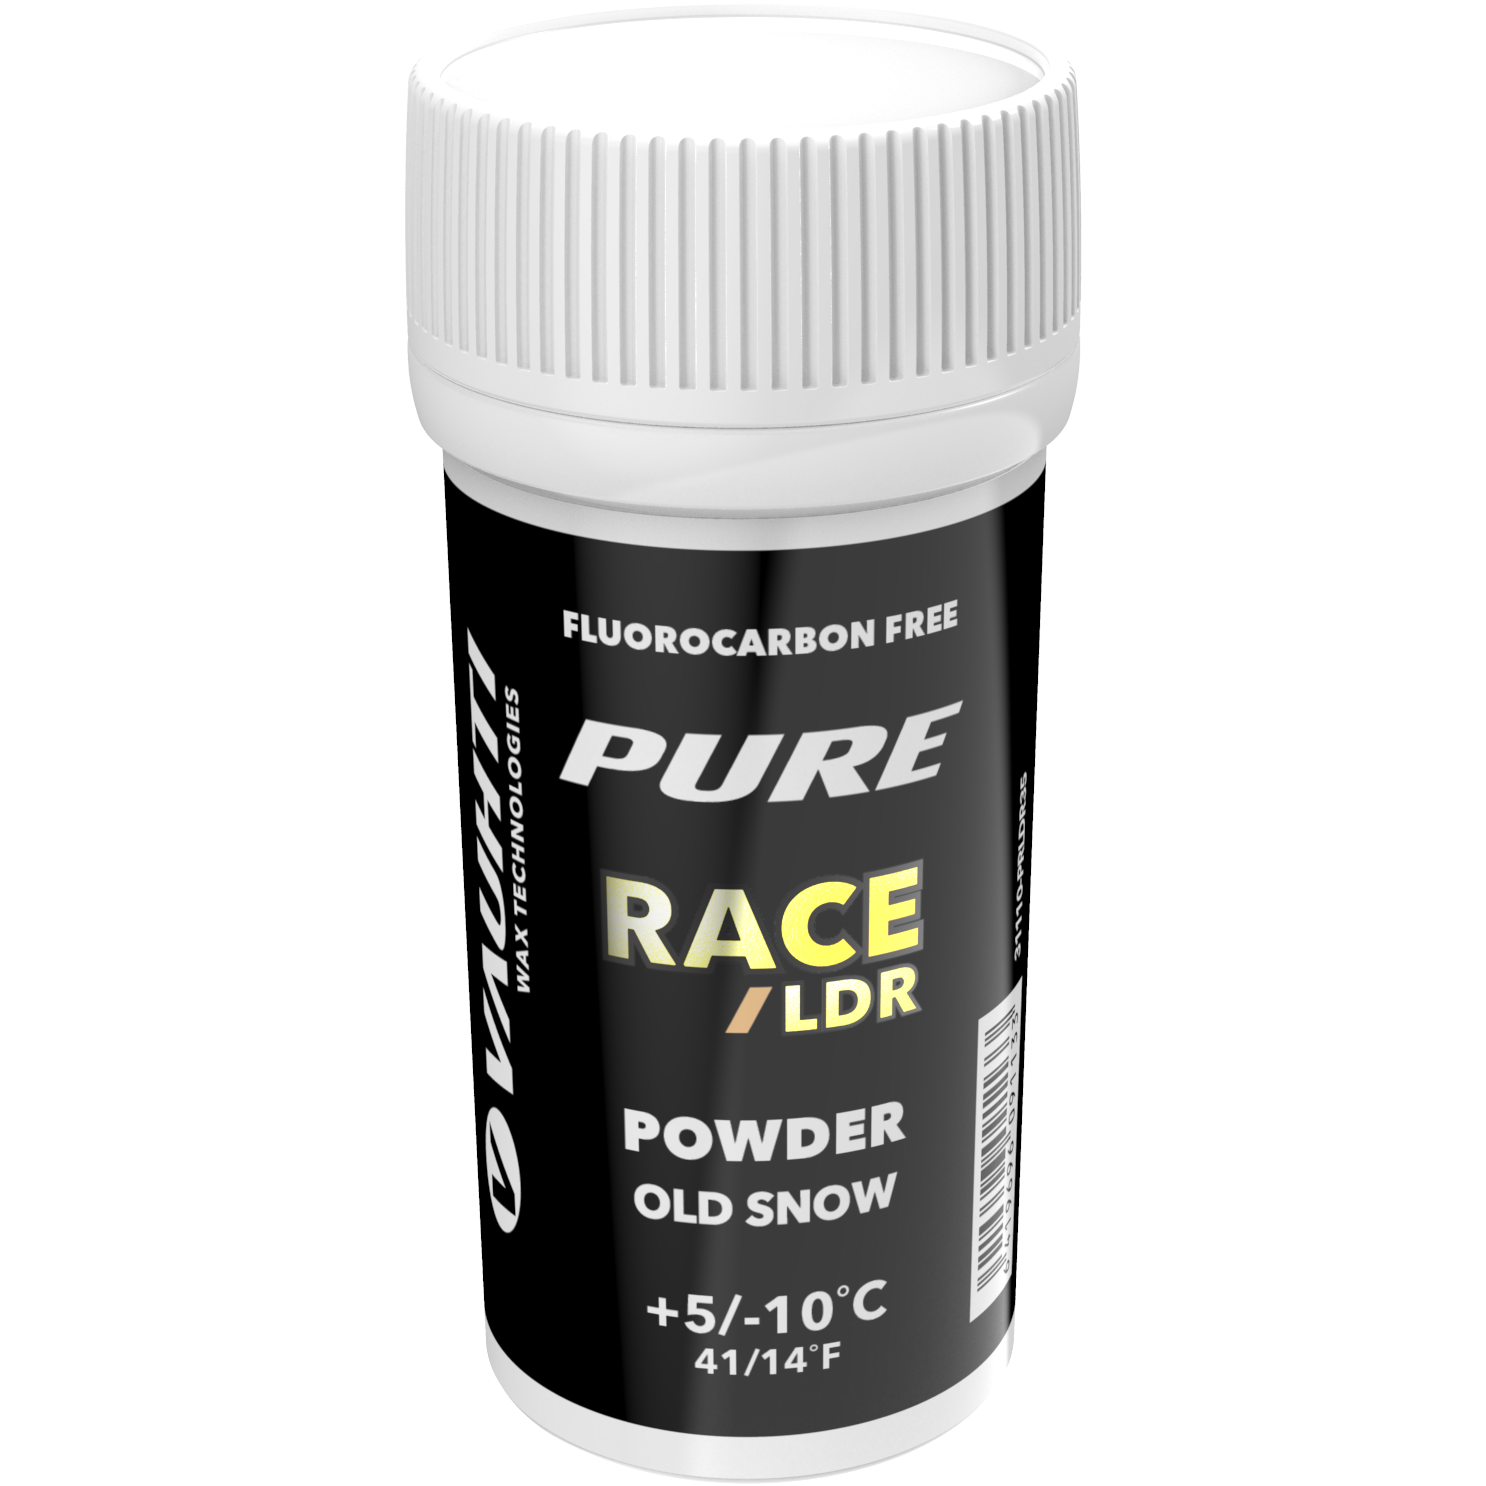 Vauhti Pure Race Old Snow LDR Powder 35g